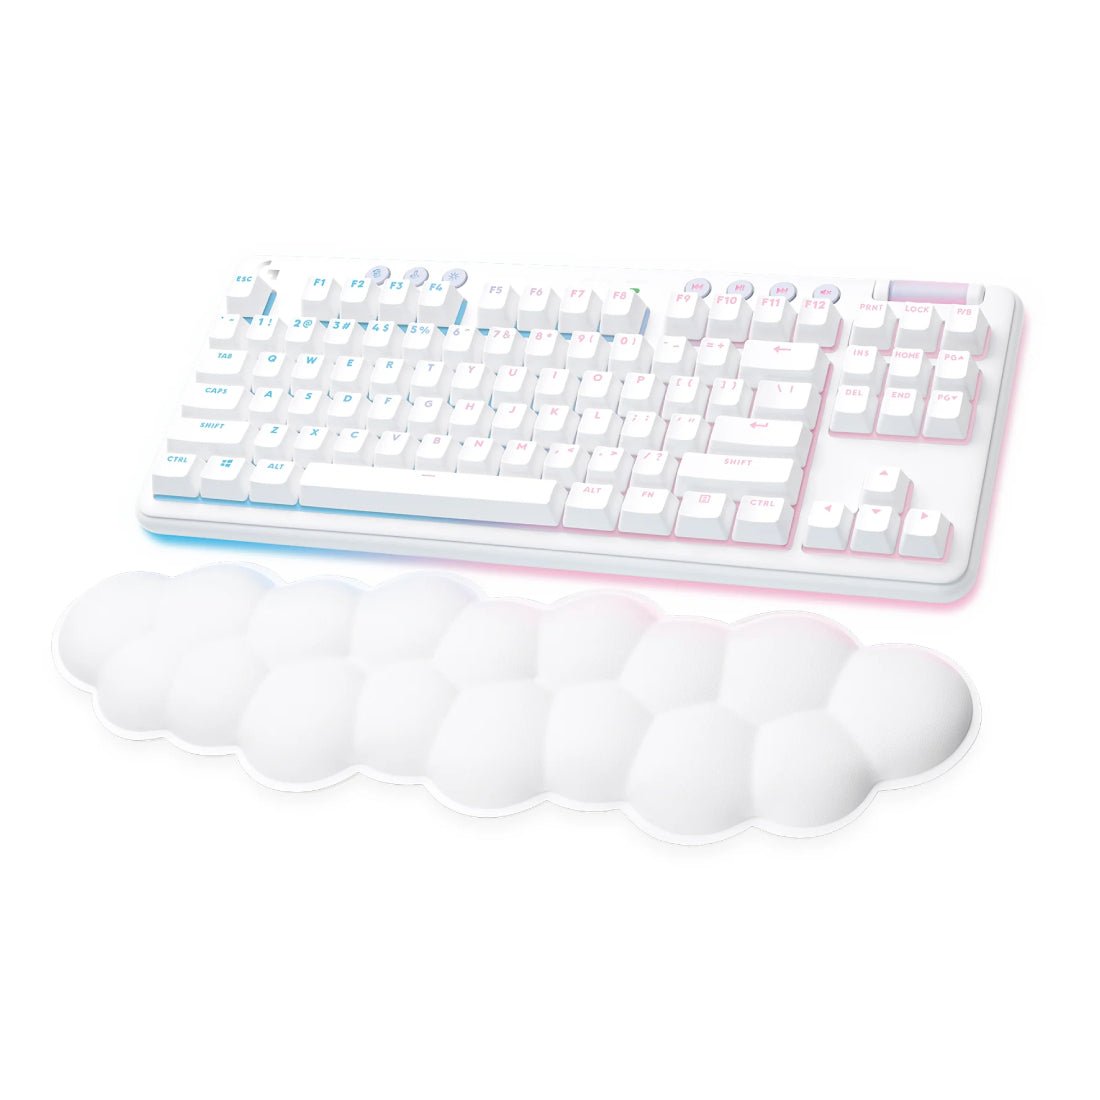 Logitech G715 TKL Wireless Mechanical Gaming Keyboard - White Mist - Store 974 | ستور ٩٧٤